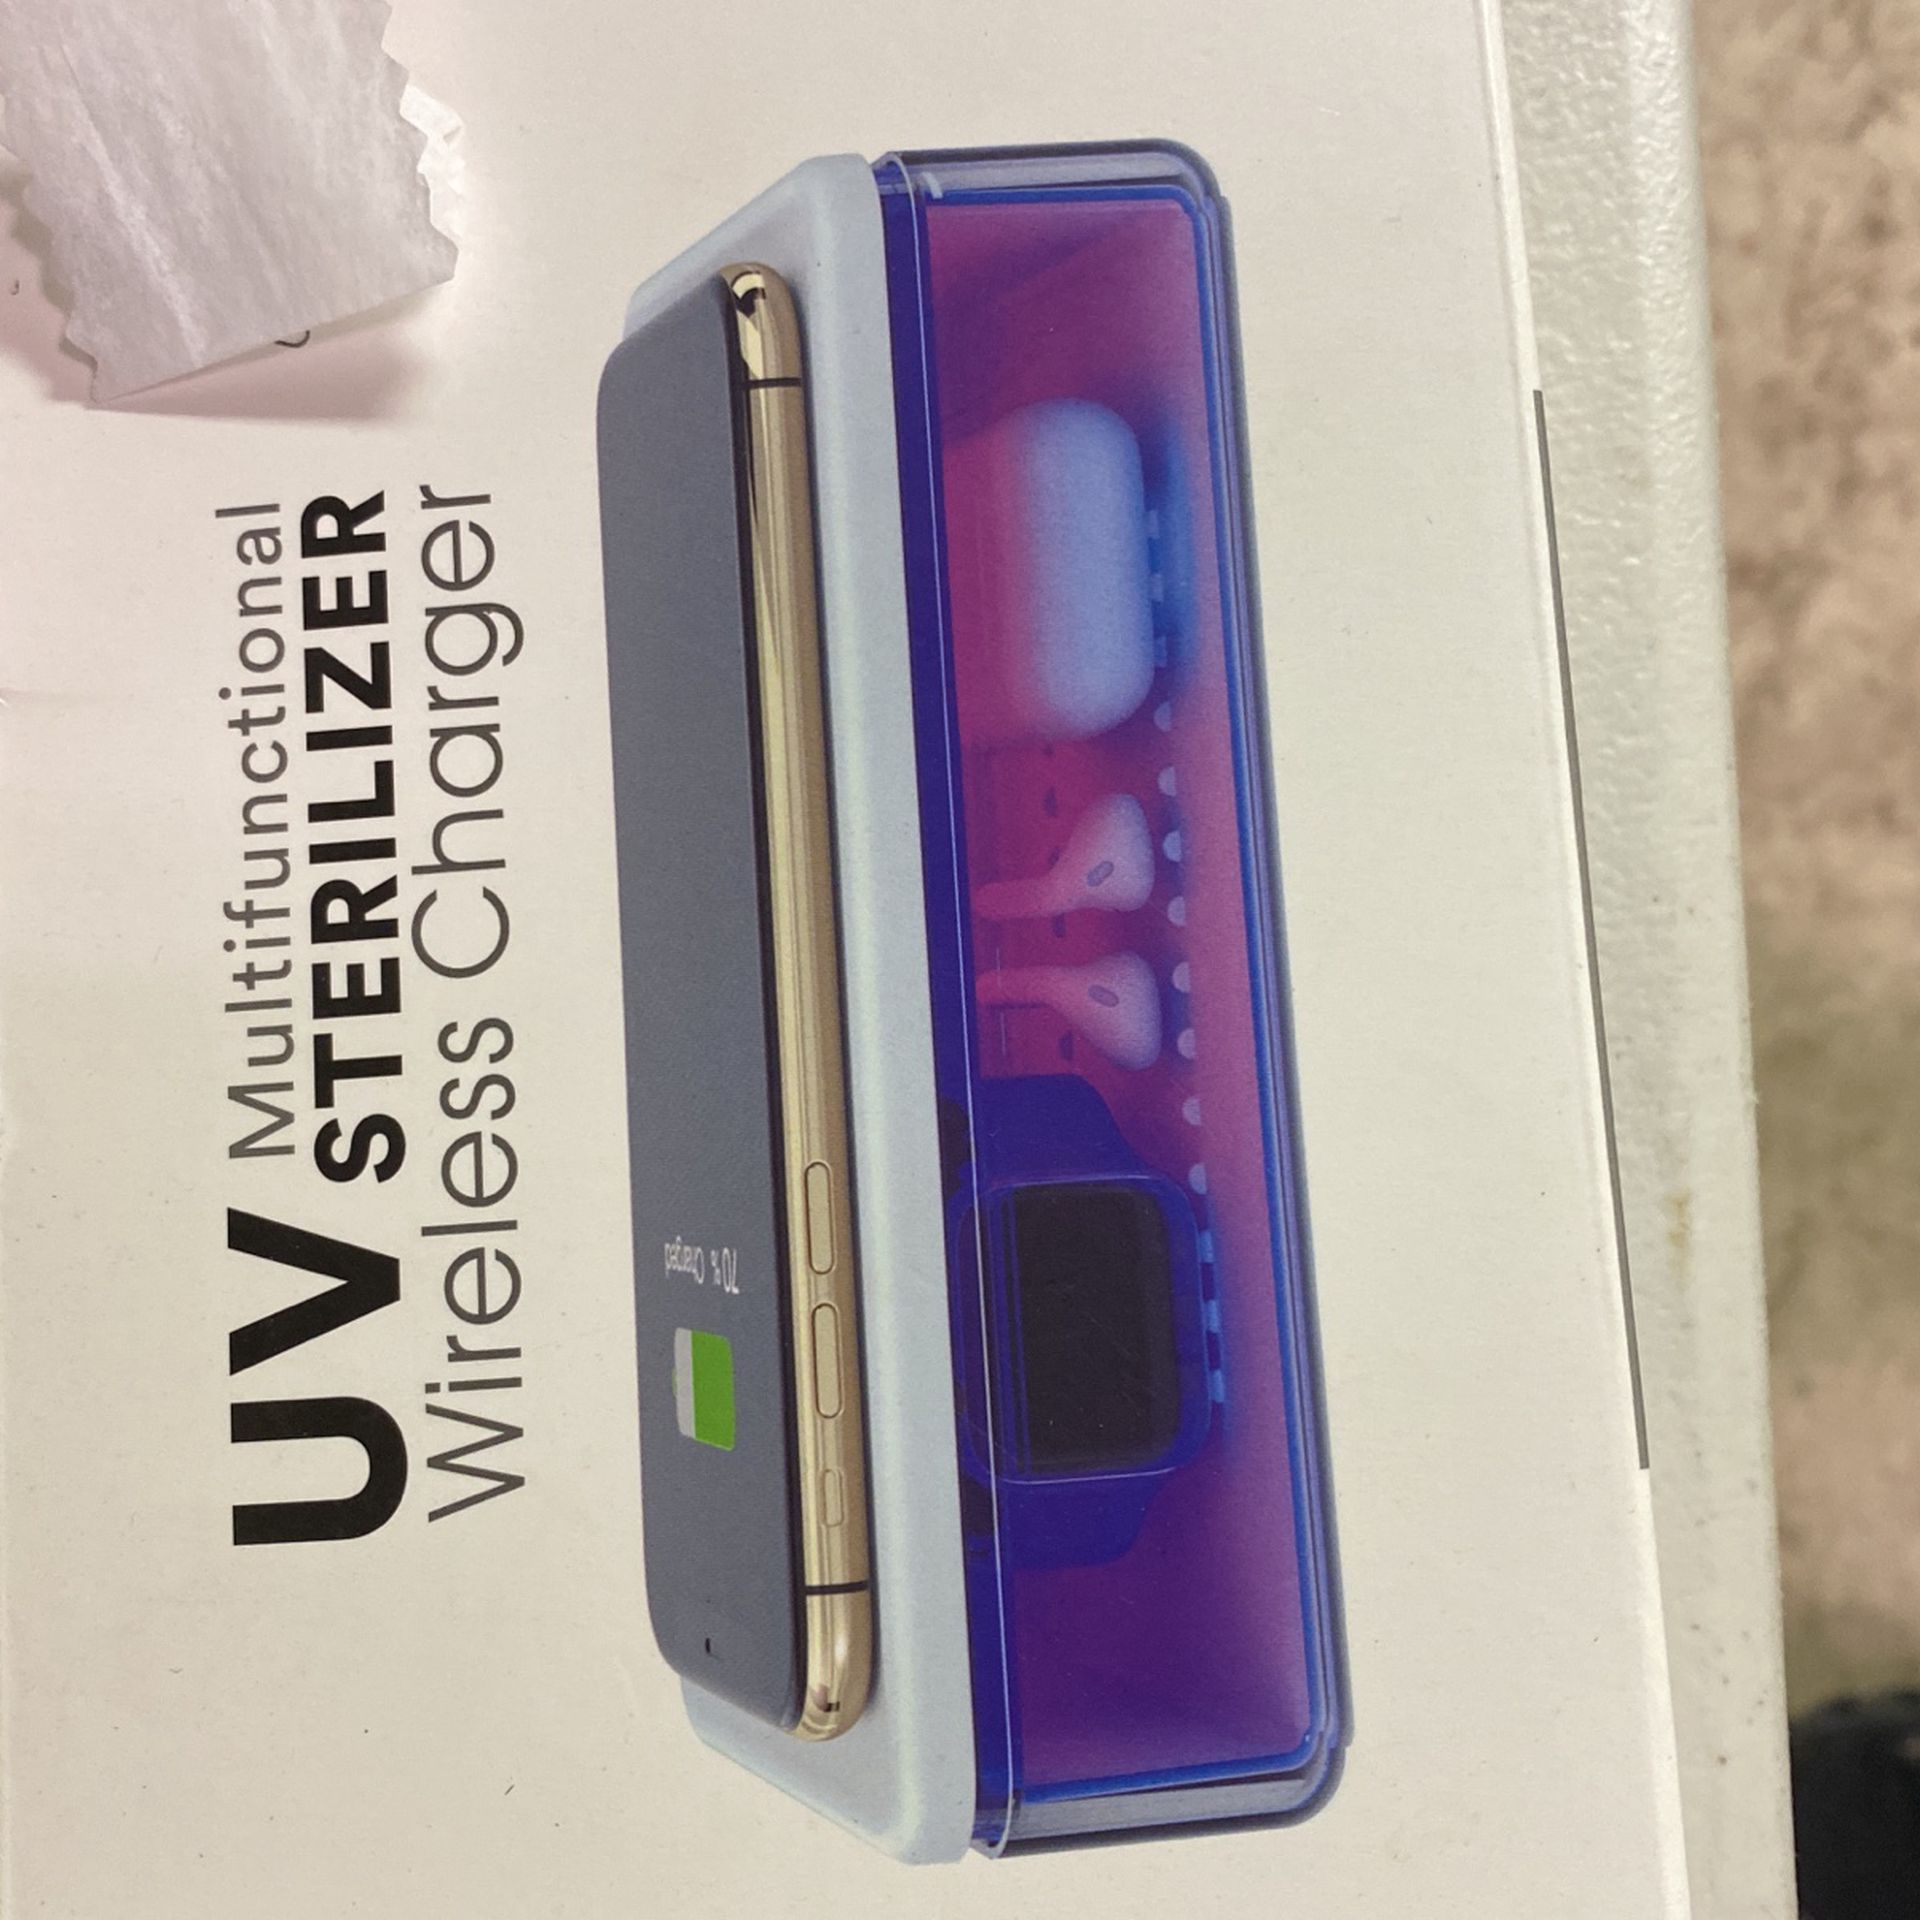 UV Multifunctional Sterilizer Wireless Charger